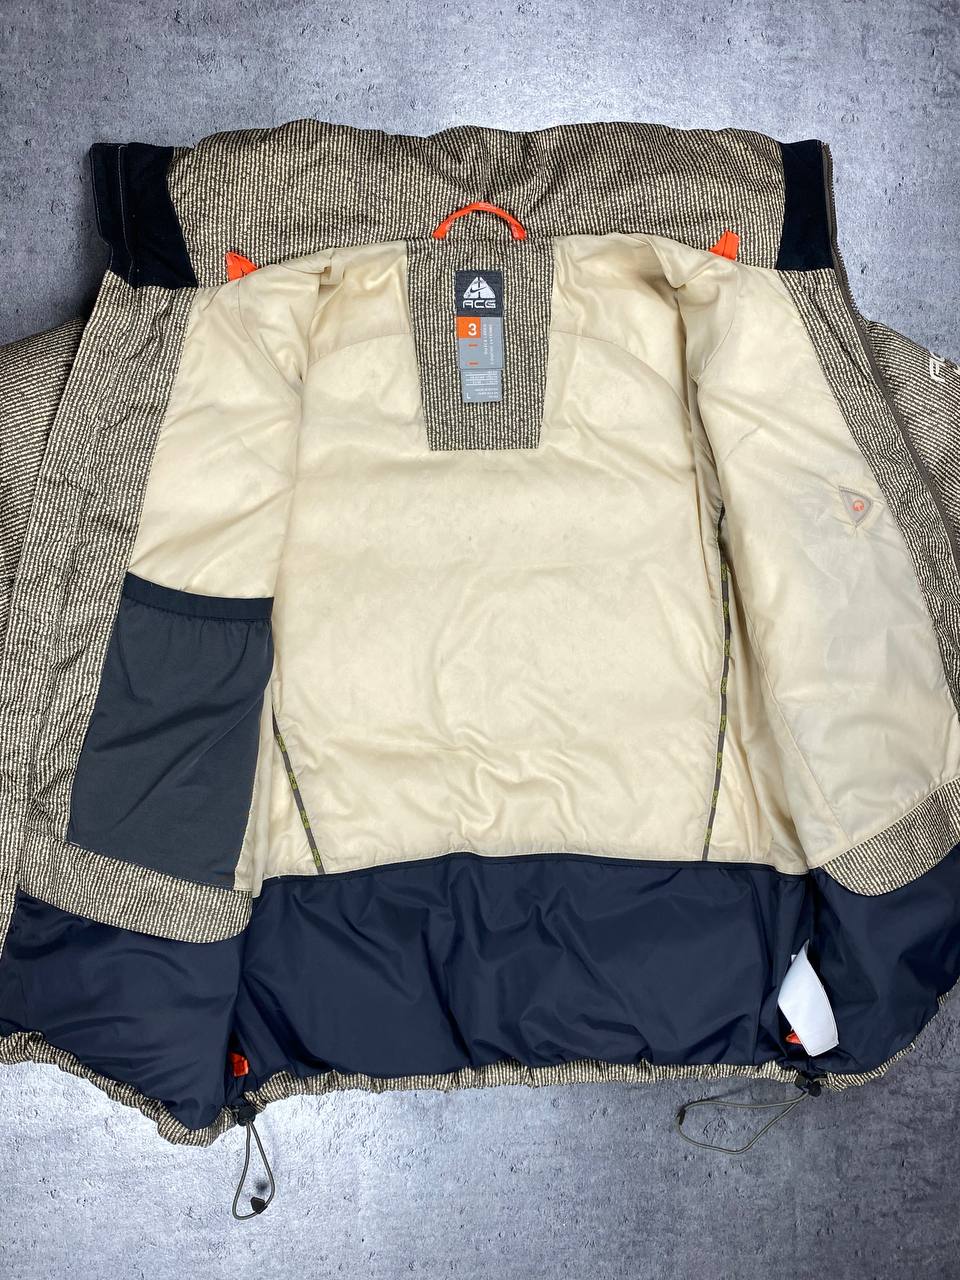 ACG Puffer Jacket Vintage 00s Outdoor Waterproof Size Large